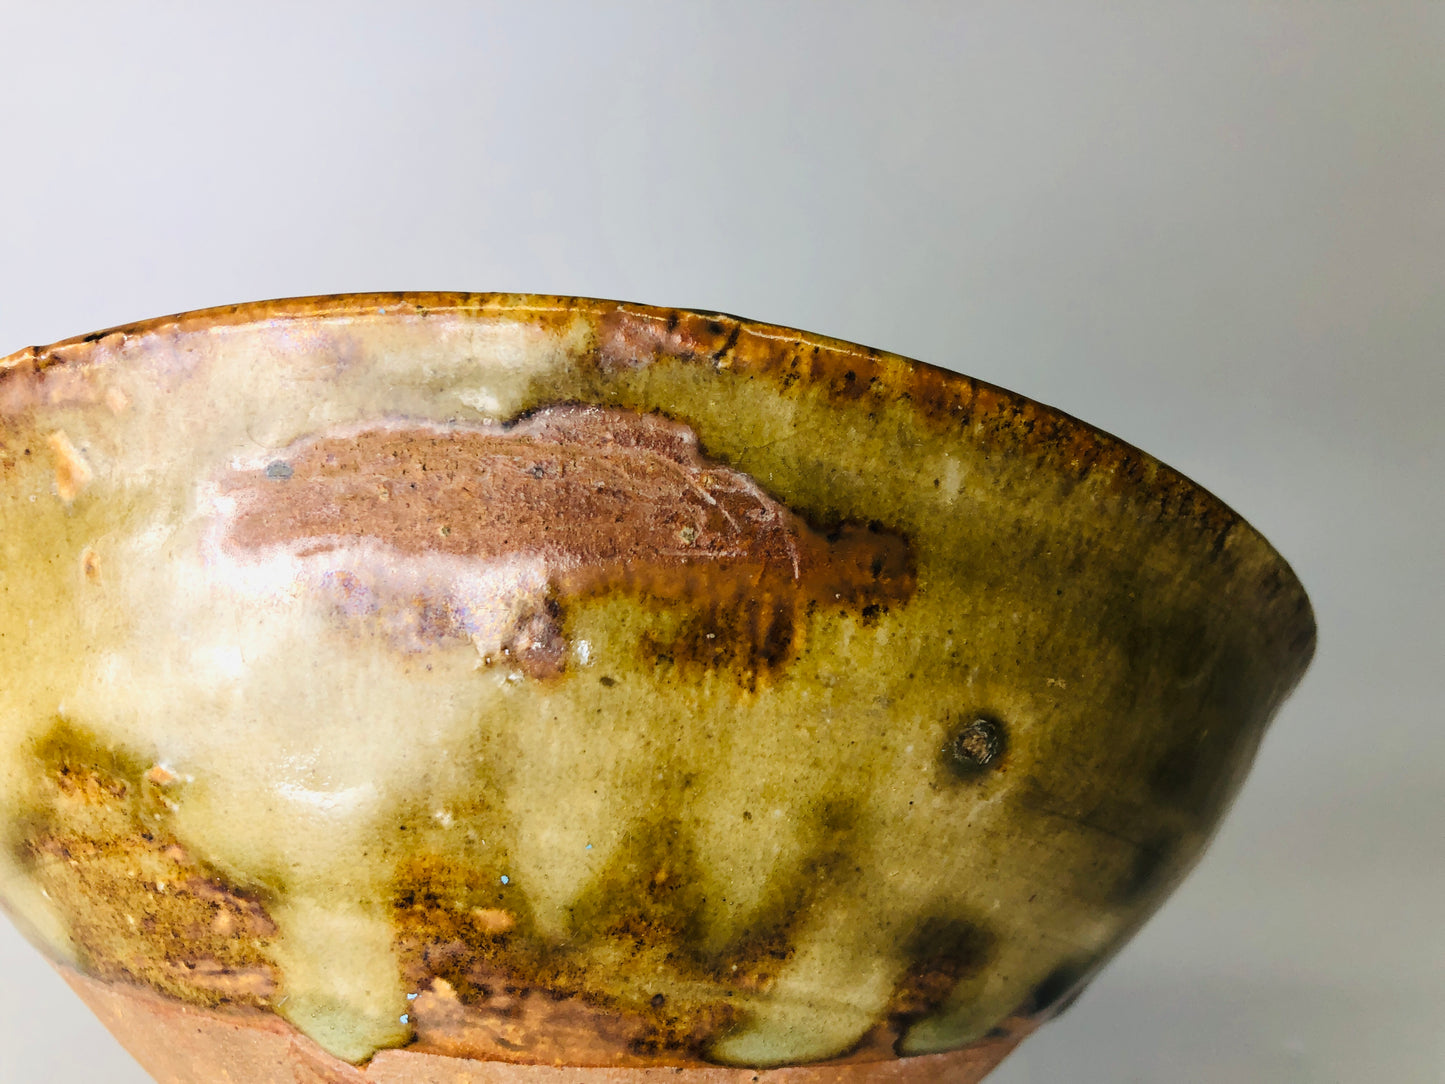 Y6047 [VIDEO] CHAWAN Seto-ware summer bowl Japan antique tea ceremony vintage pottery